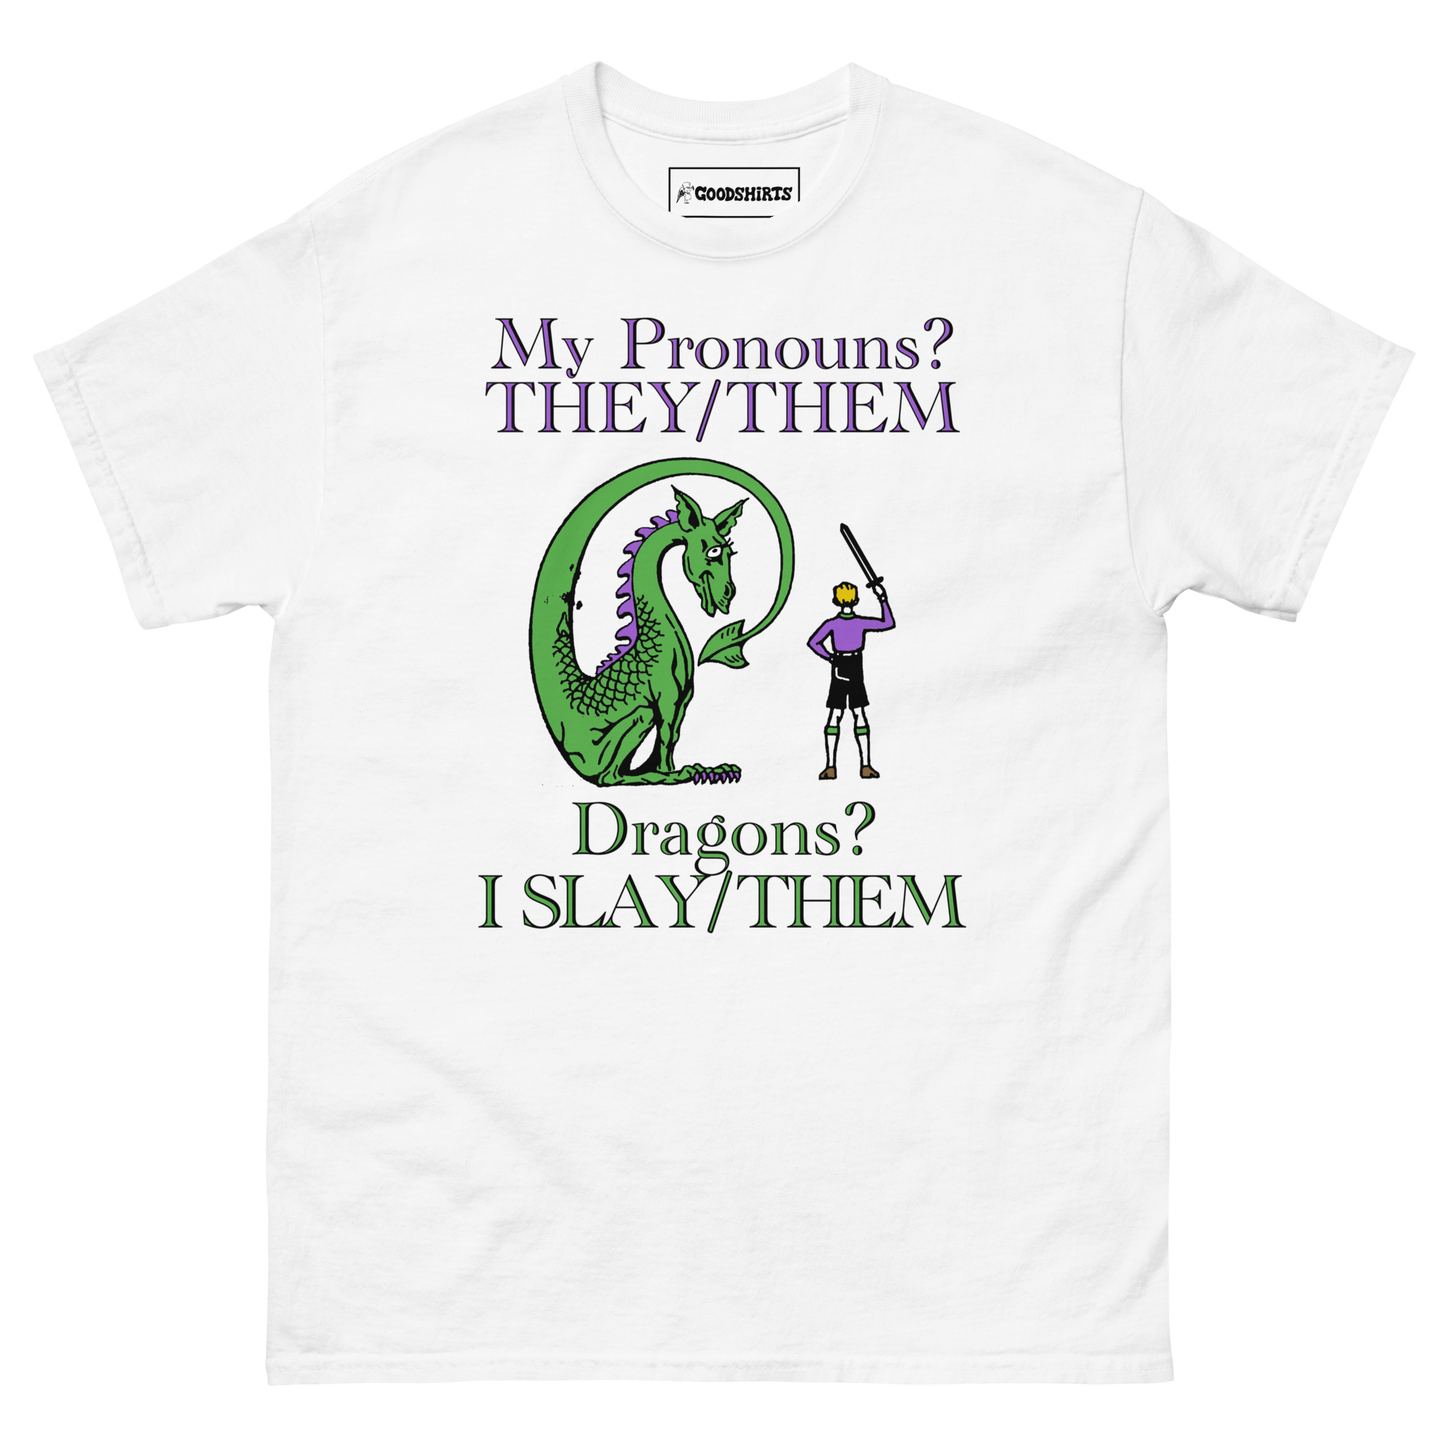 My Pronouns? They/Them. Dragons? I Slay/Them.